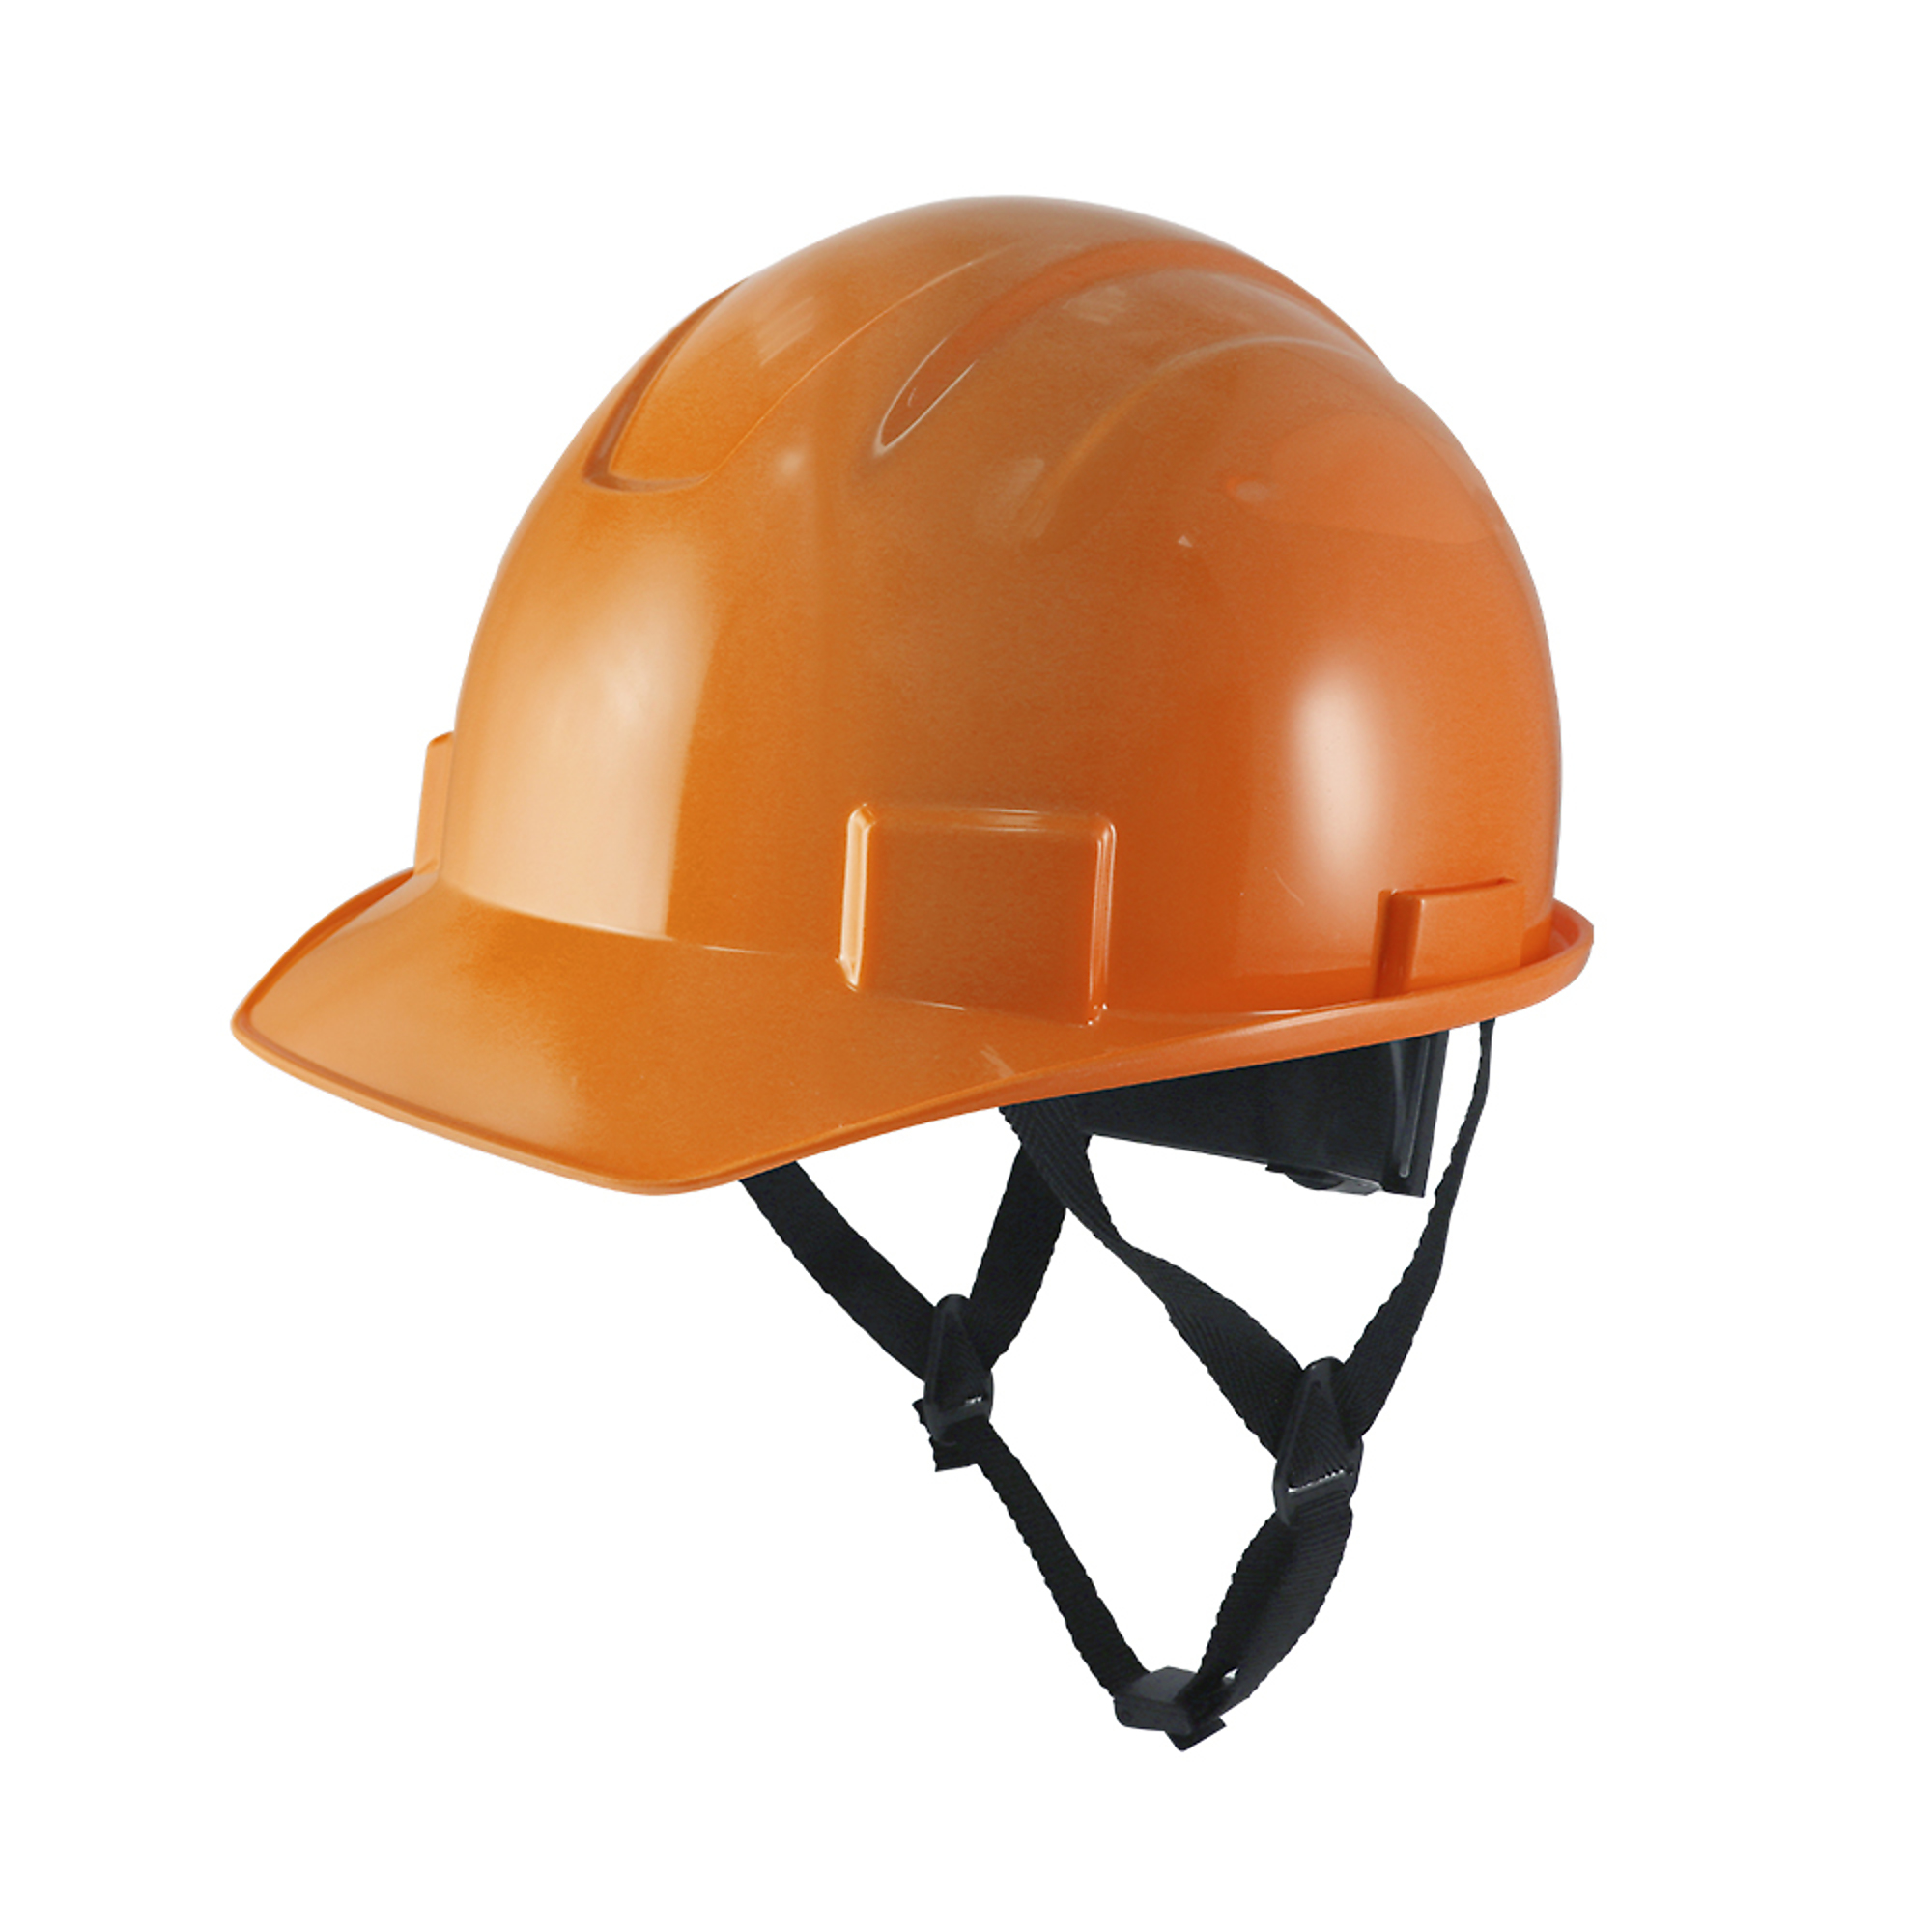 General Electric, Safety Helmet- Non-Vented- Orange, Size One Size, Color Orange, Hat Style Helmet, Model GH327O